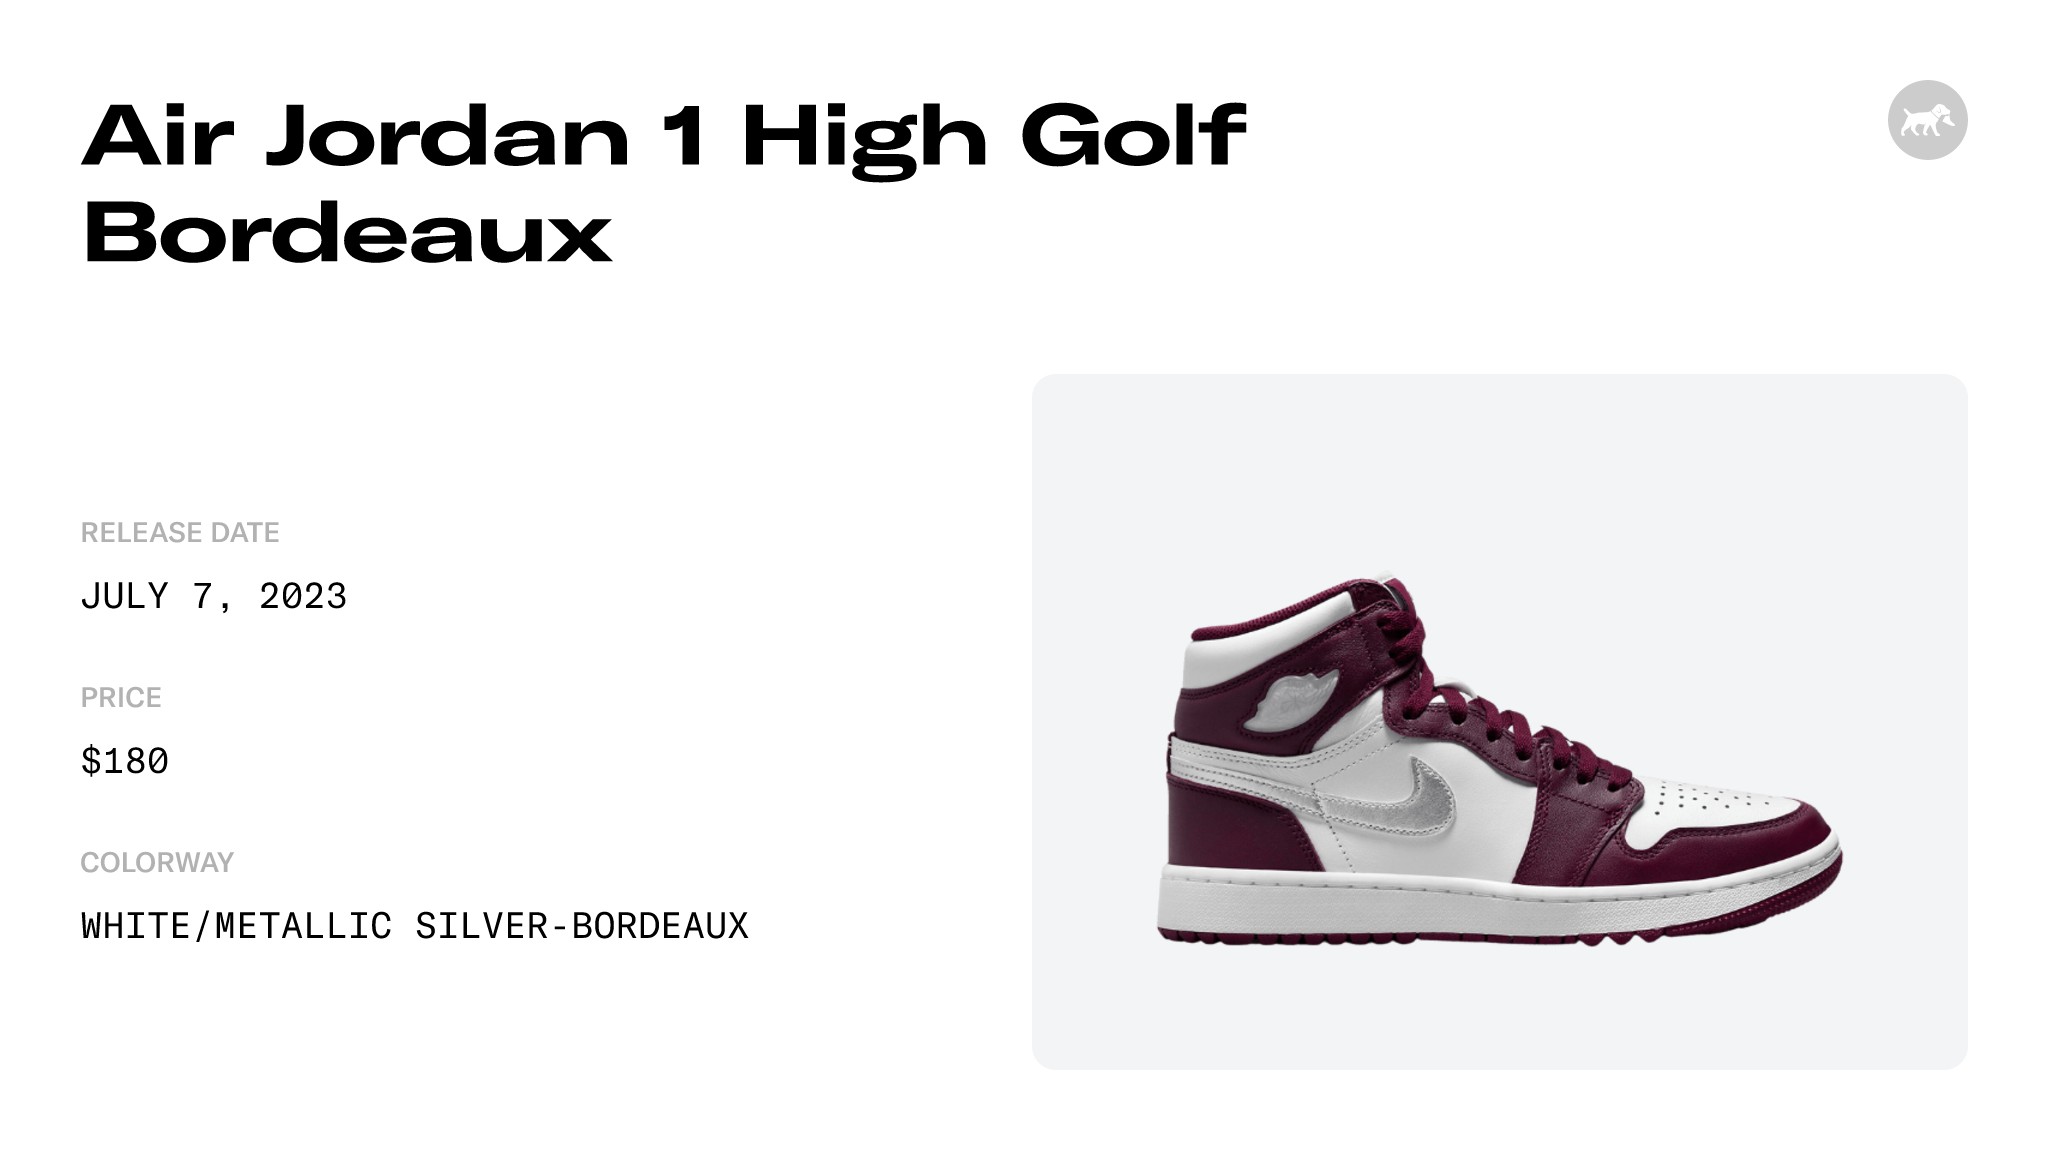 Air Jordan 1 High Golf Pebble Beach Raffles and Release Date